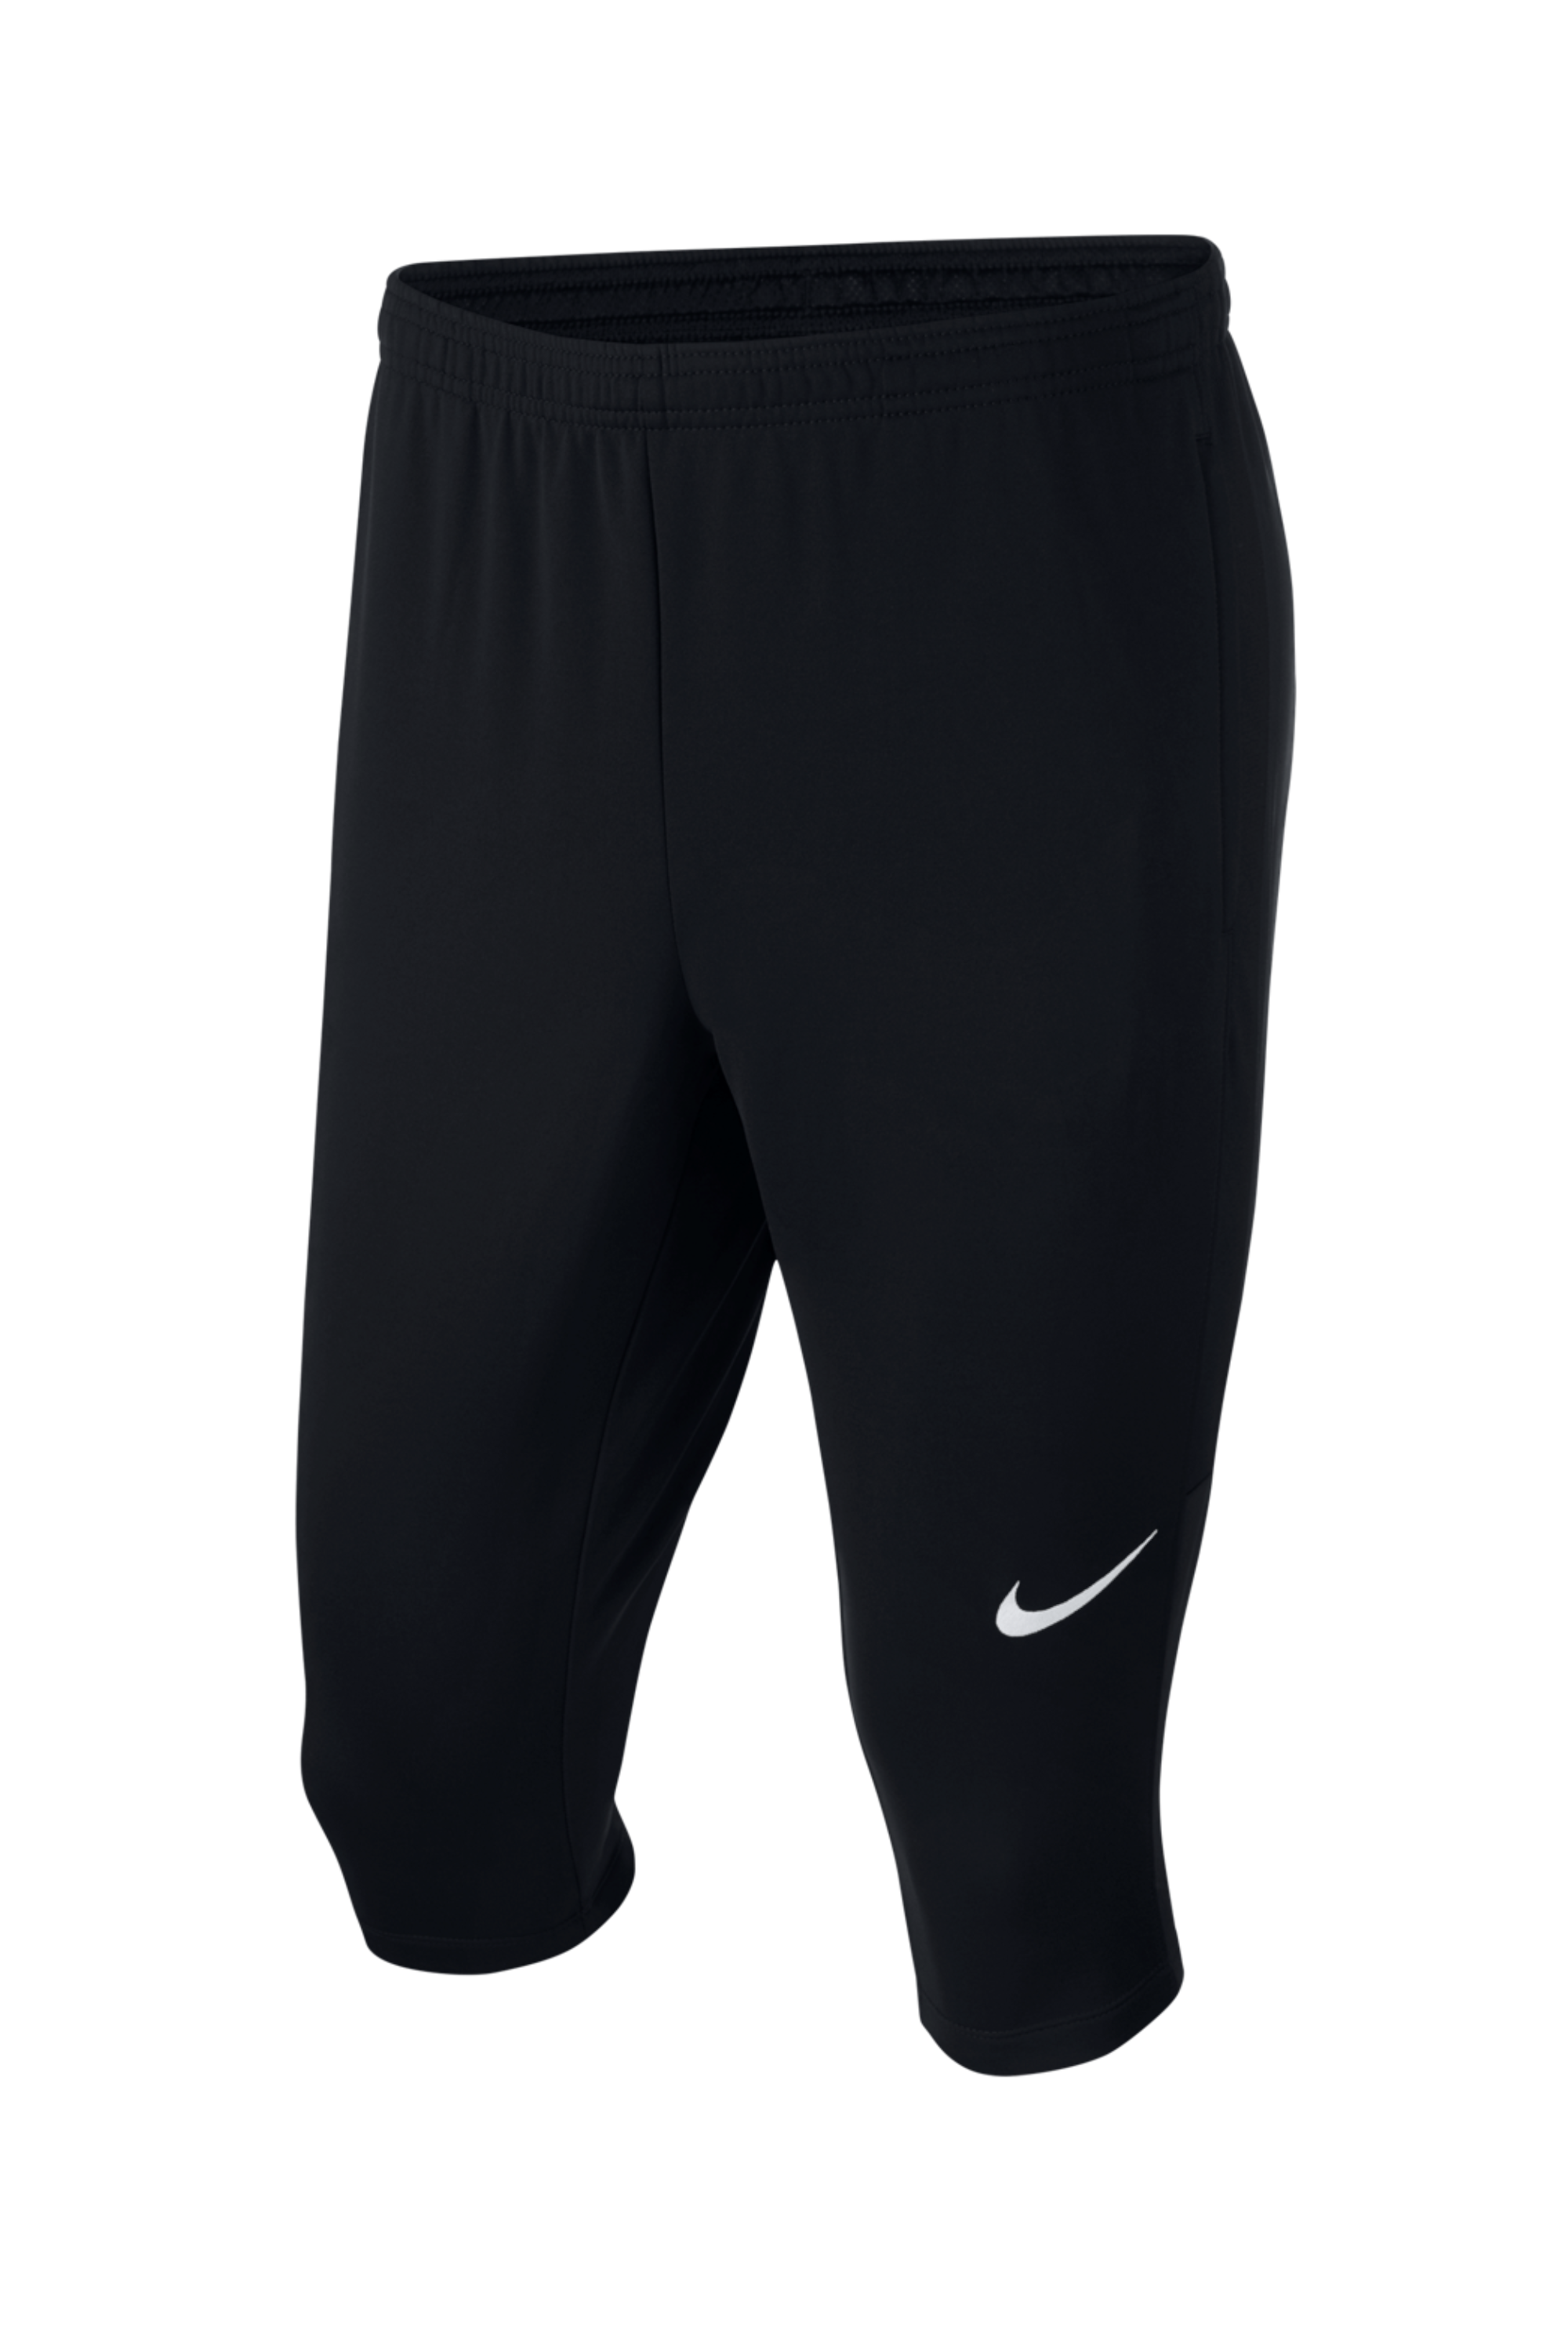 Original Mariner Skadelig Shorts 3/4 Nike Dry Strike | R-GOL.com - Football boots & equipment